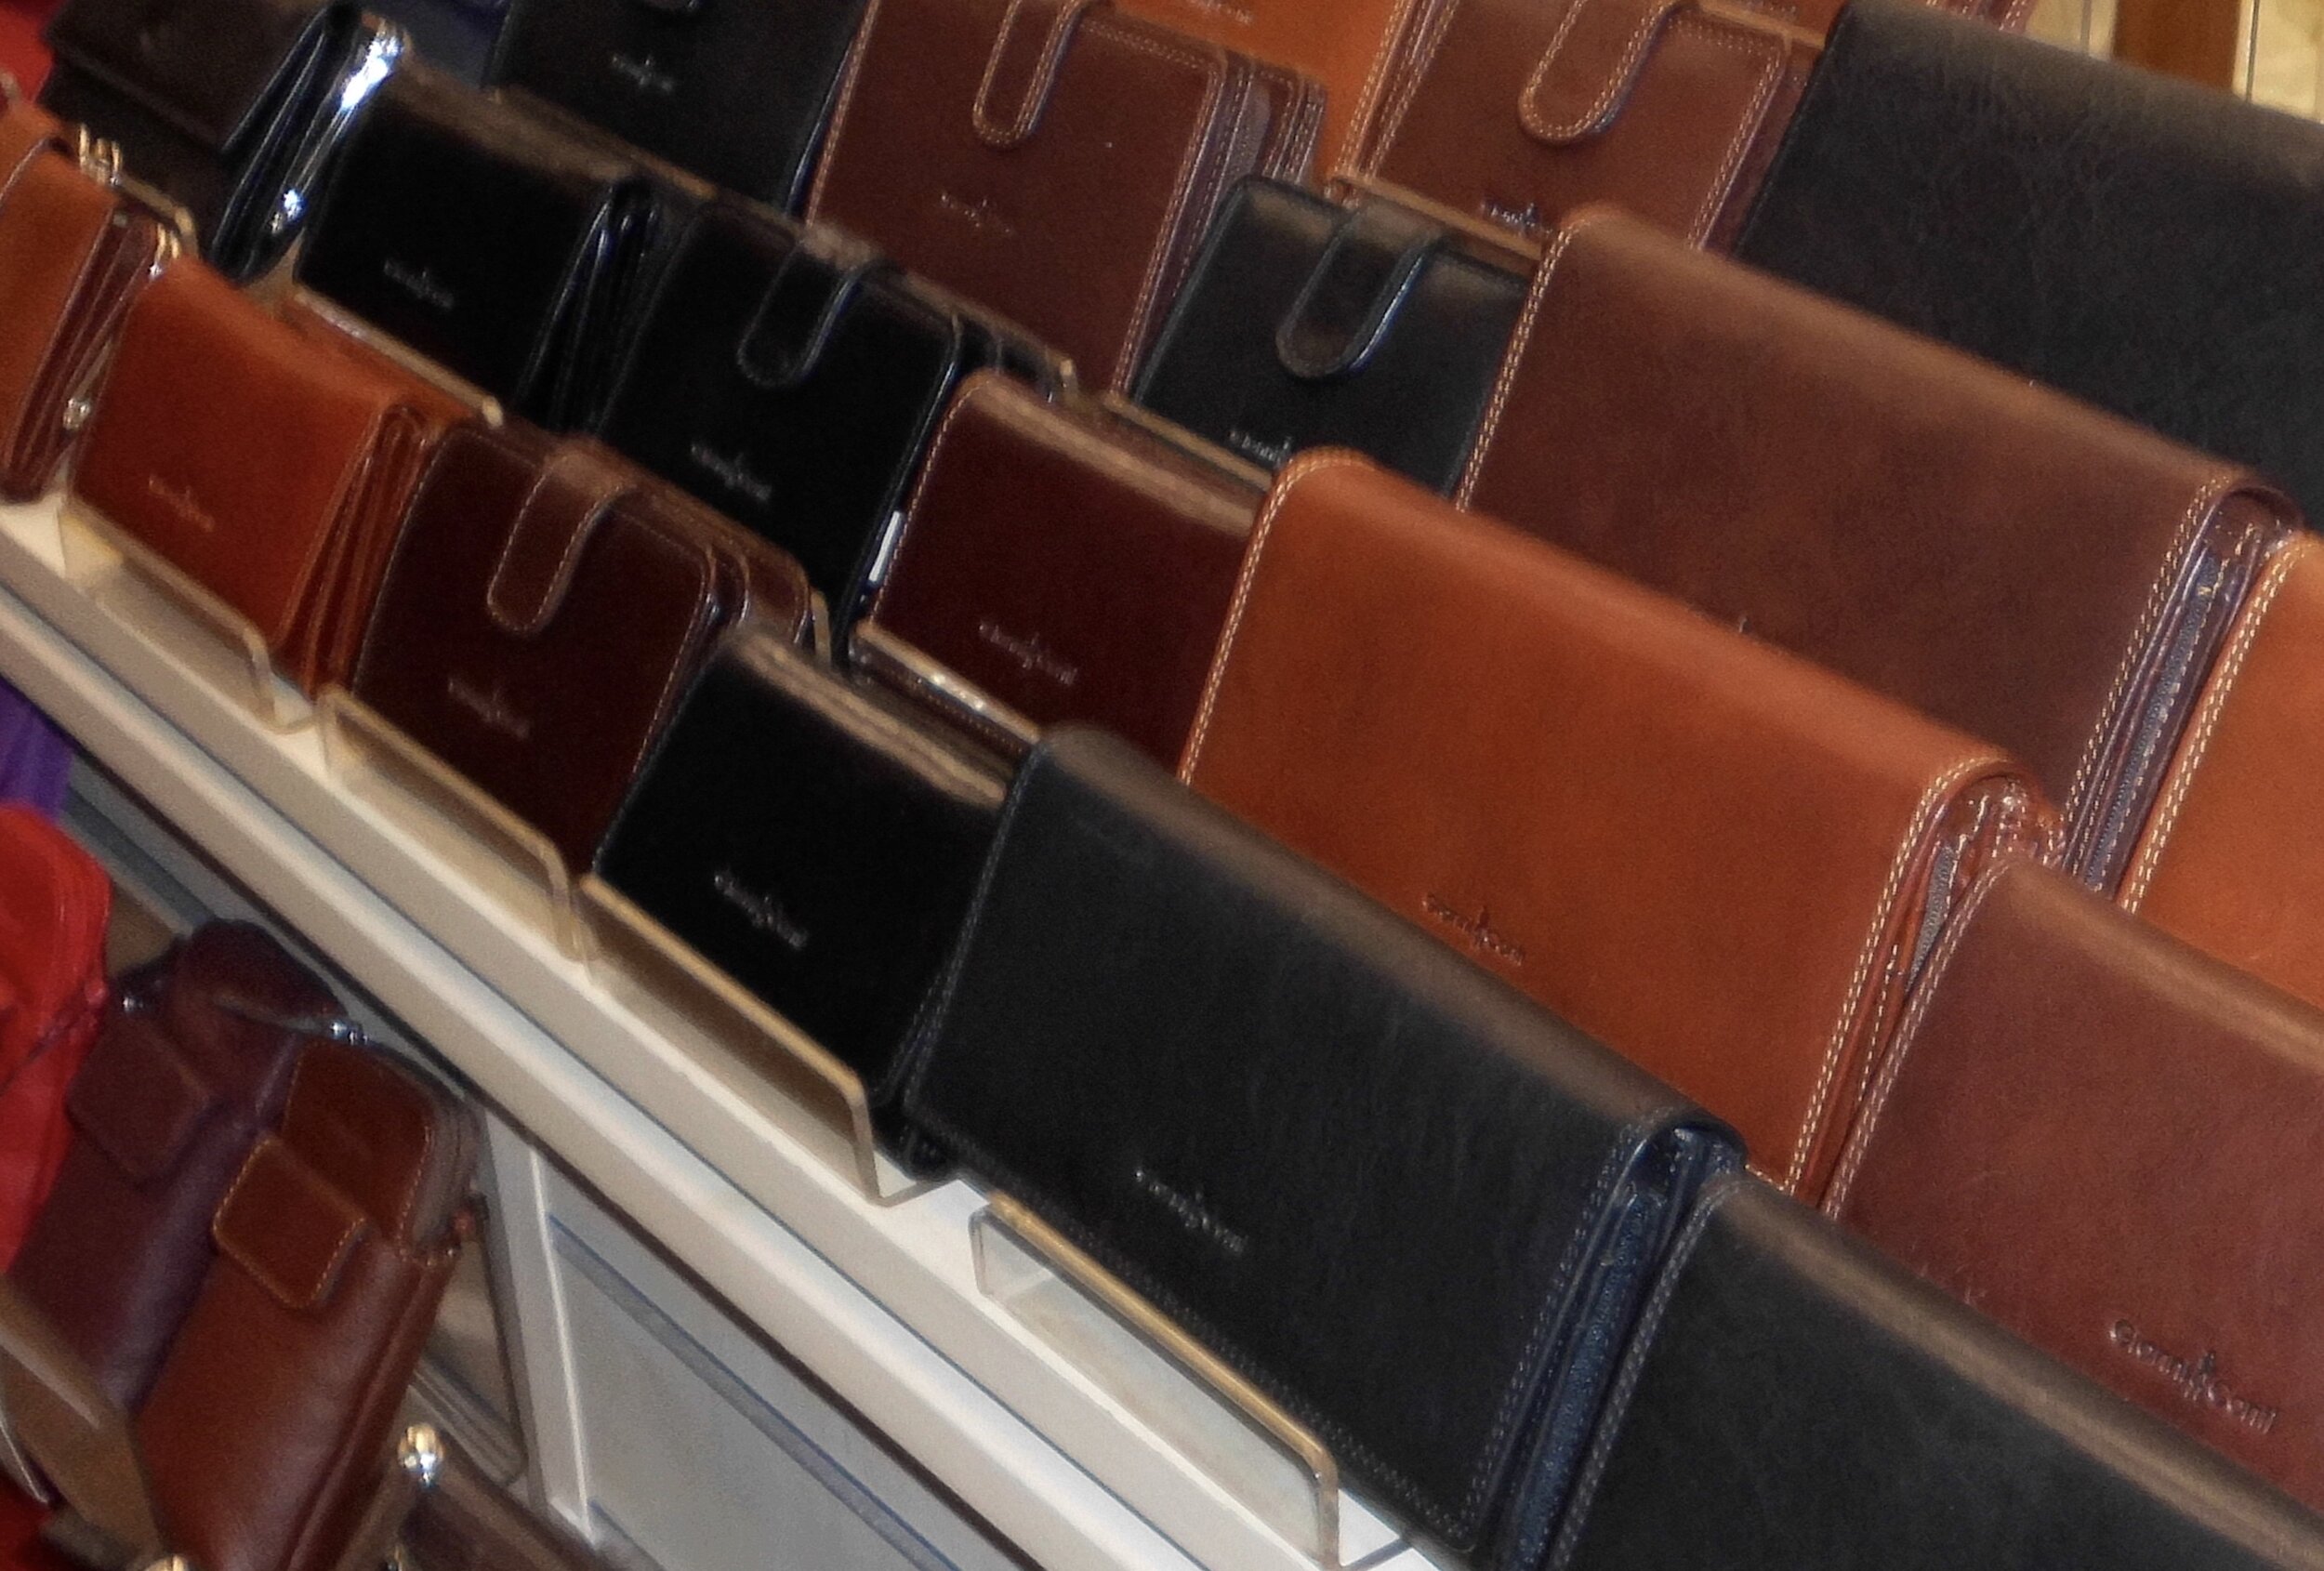 Italian Leather purses from Gianni Conti